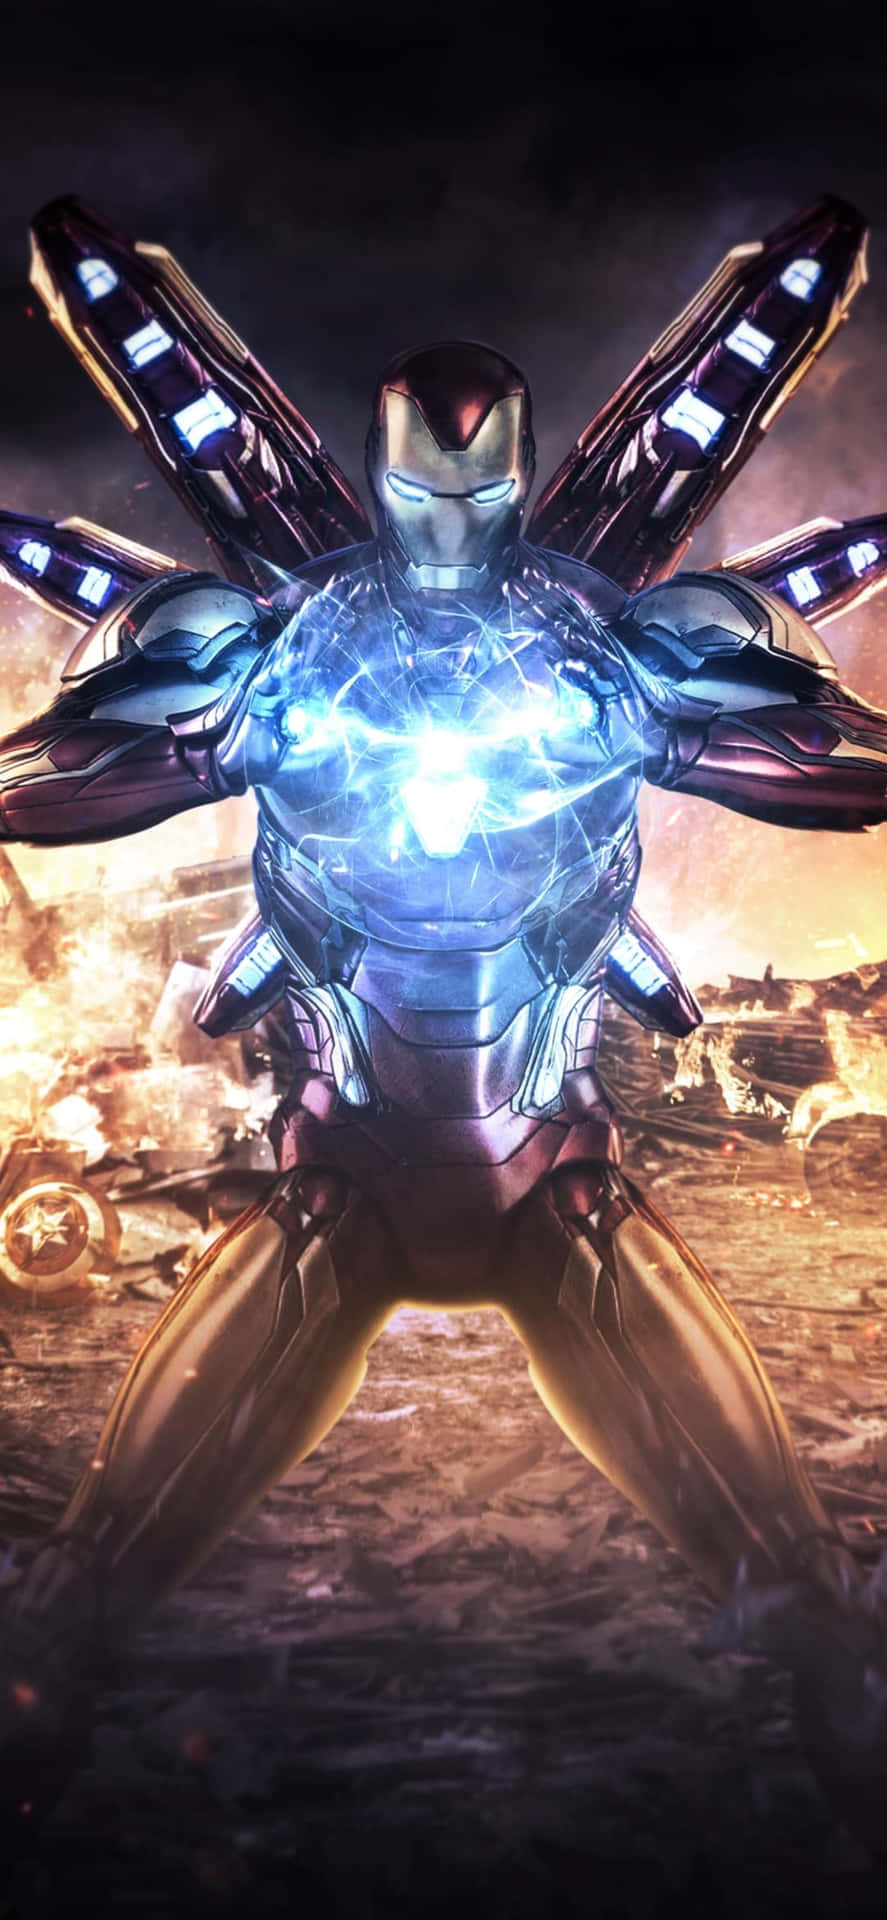 Iphonex-bakgrund Med Iron Man I Endgame-dräkt